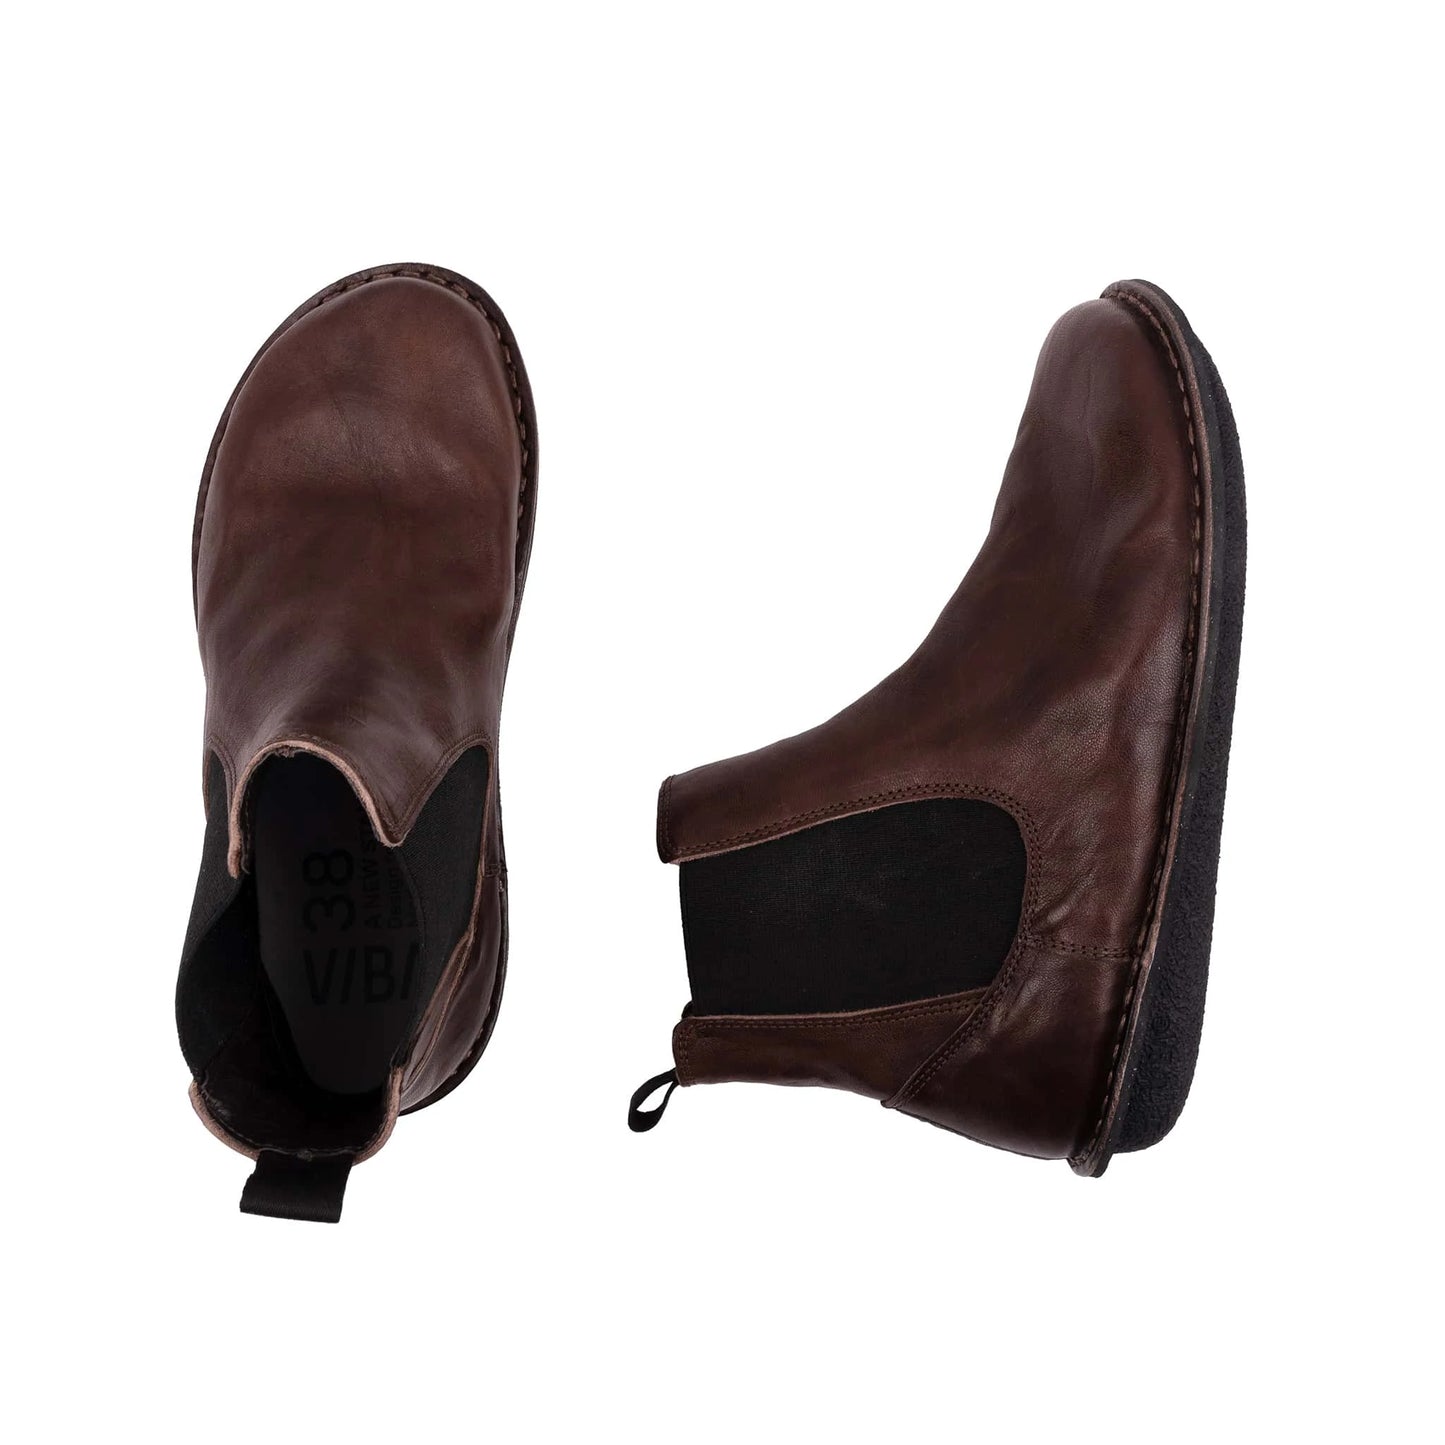 VIBAe Footwear / Helsinki Boot - Cocoa Brown